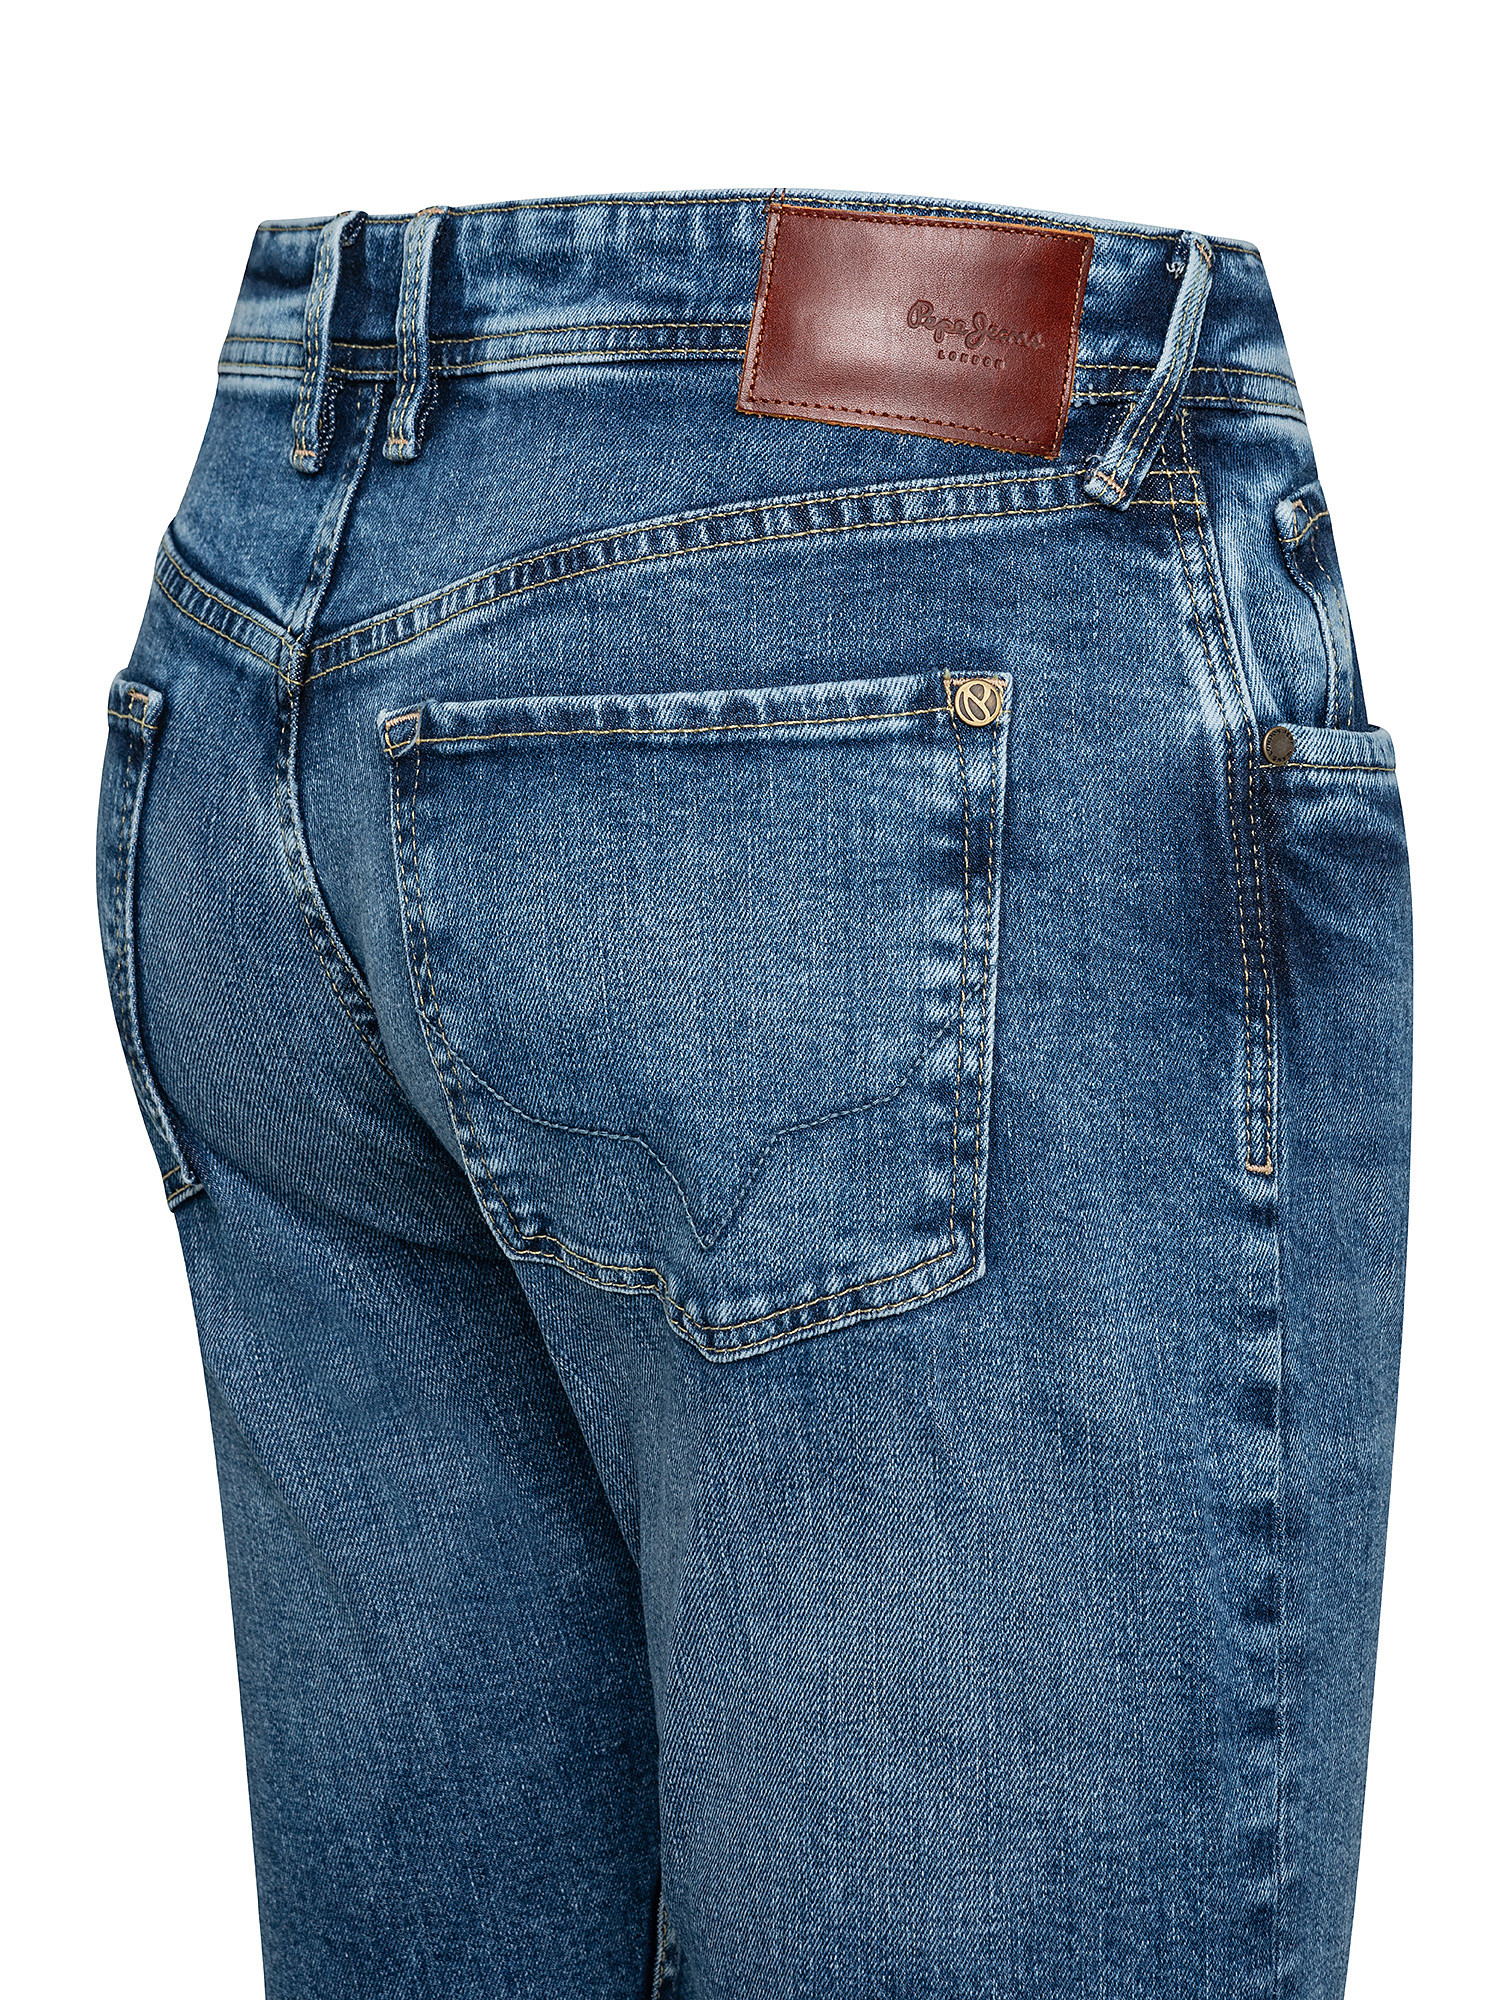 Jeans cinque tasche, Denim, large image number 2